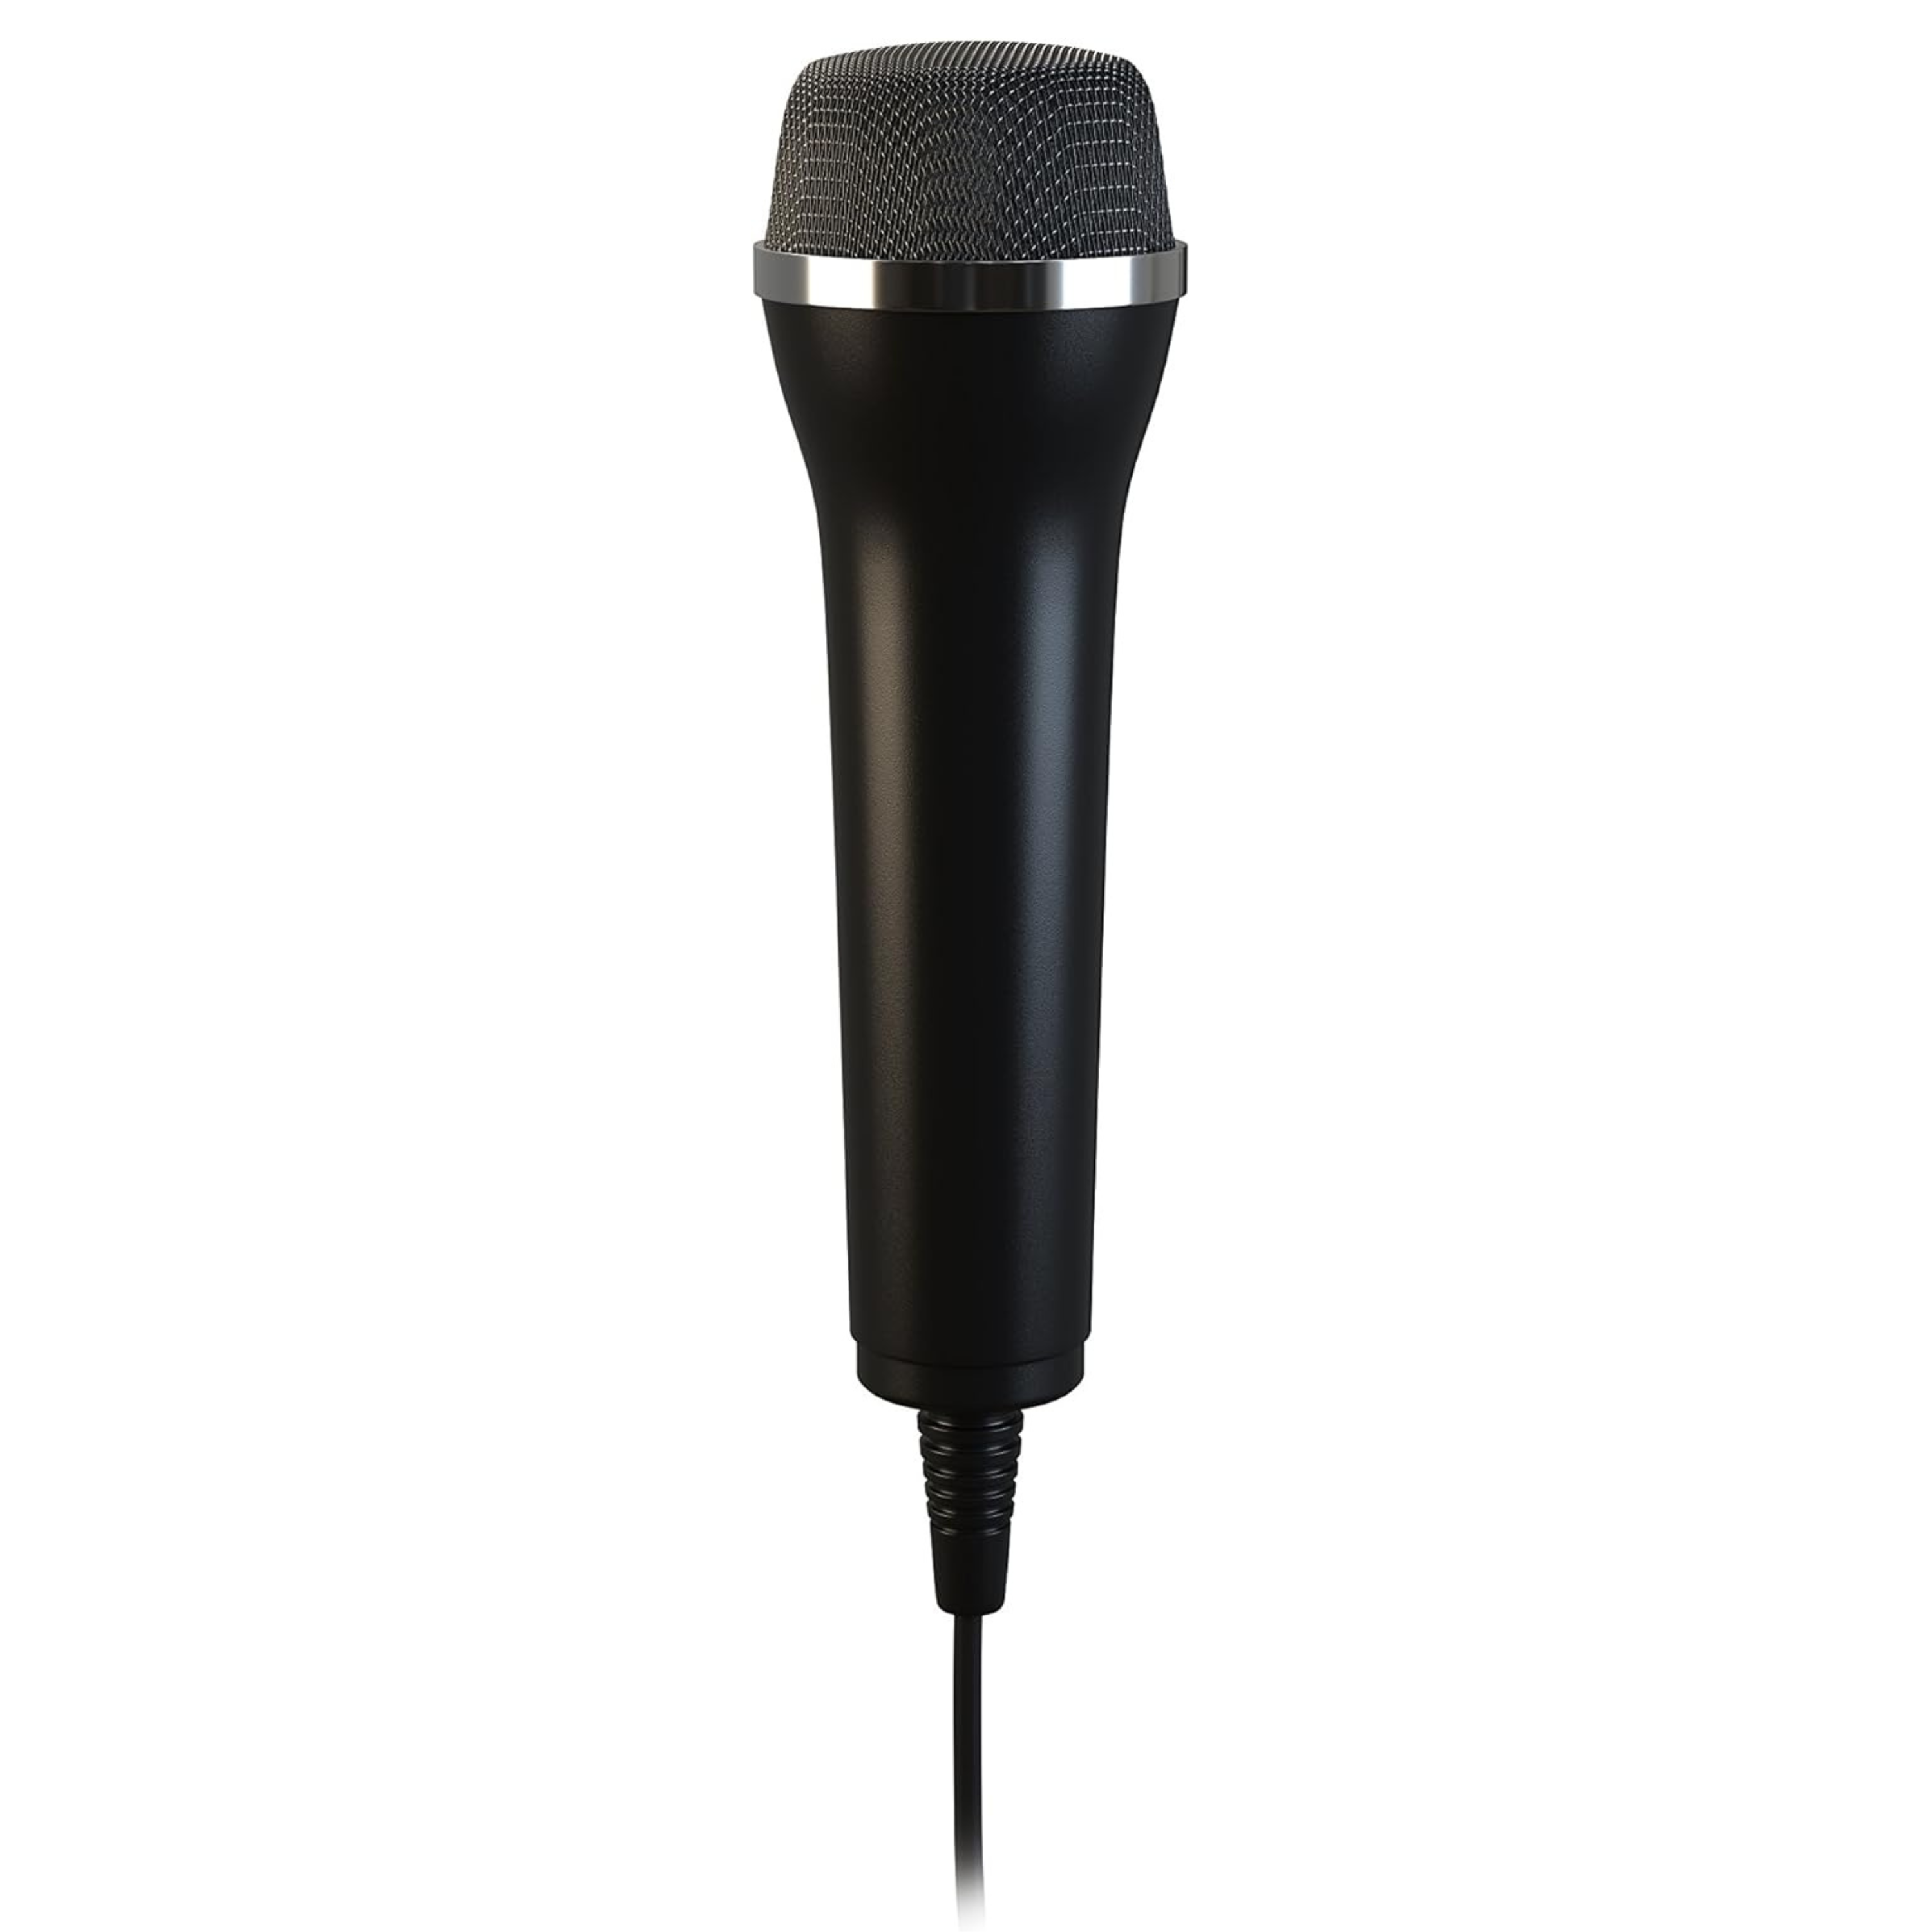 Lioncast Mikrofon für Karaoke